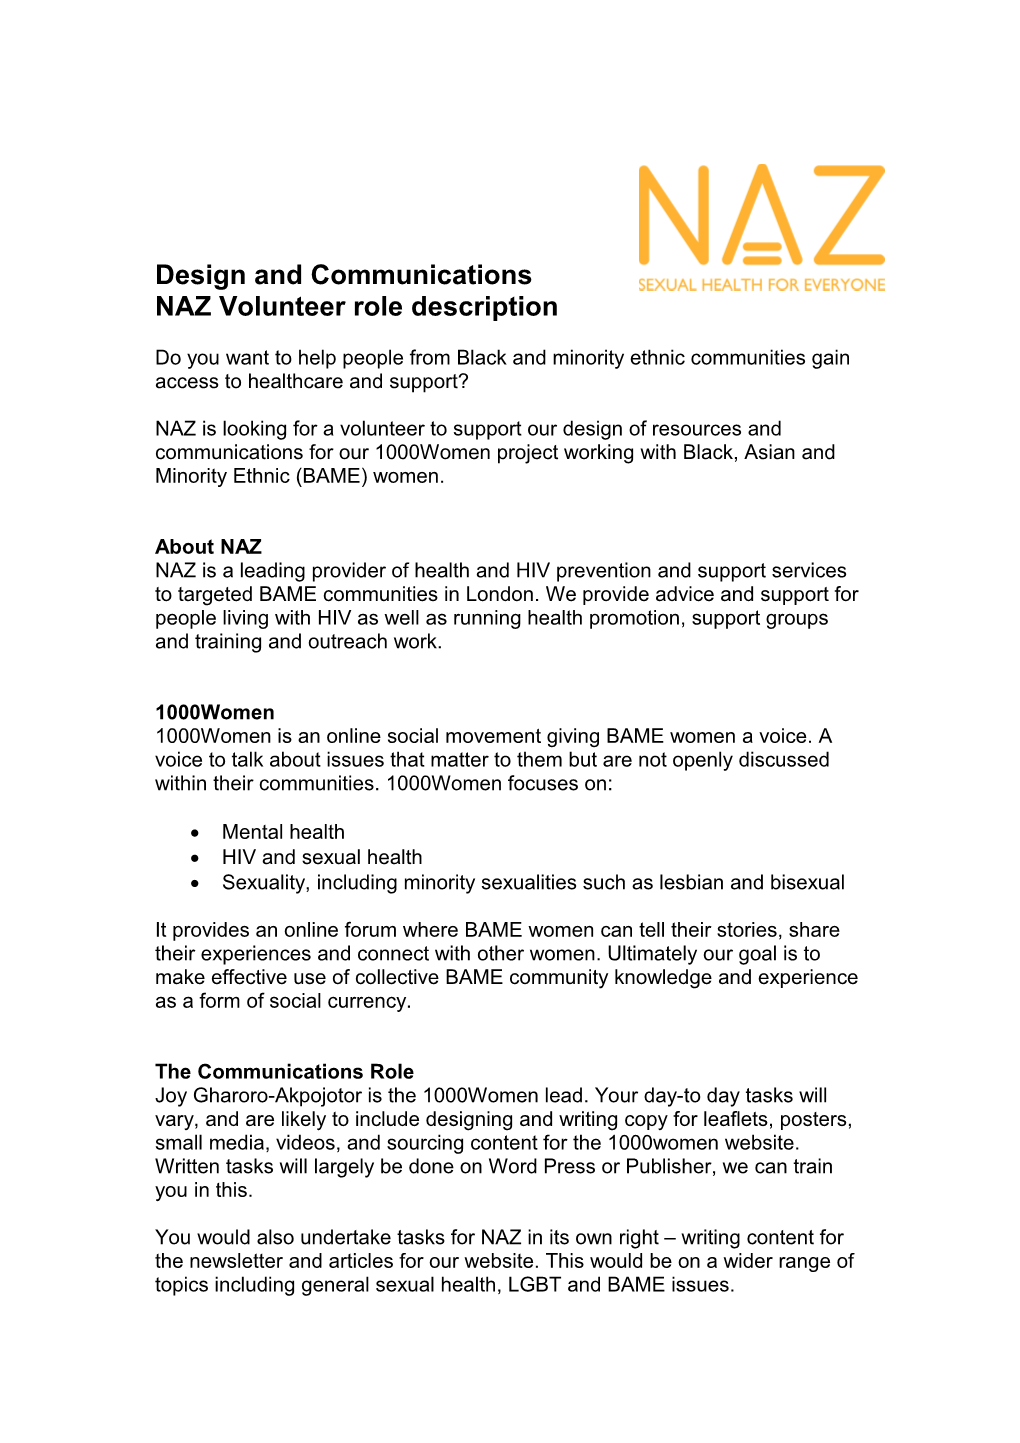 NAZ Volunteer Role Description